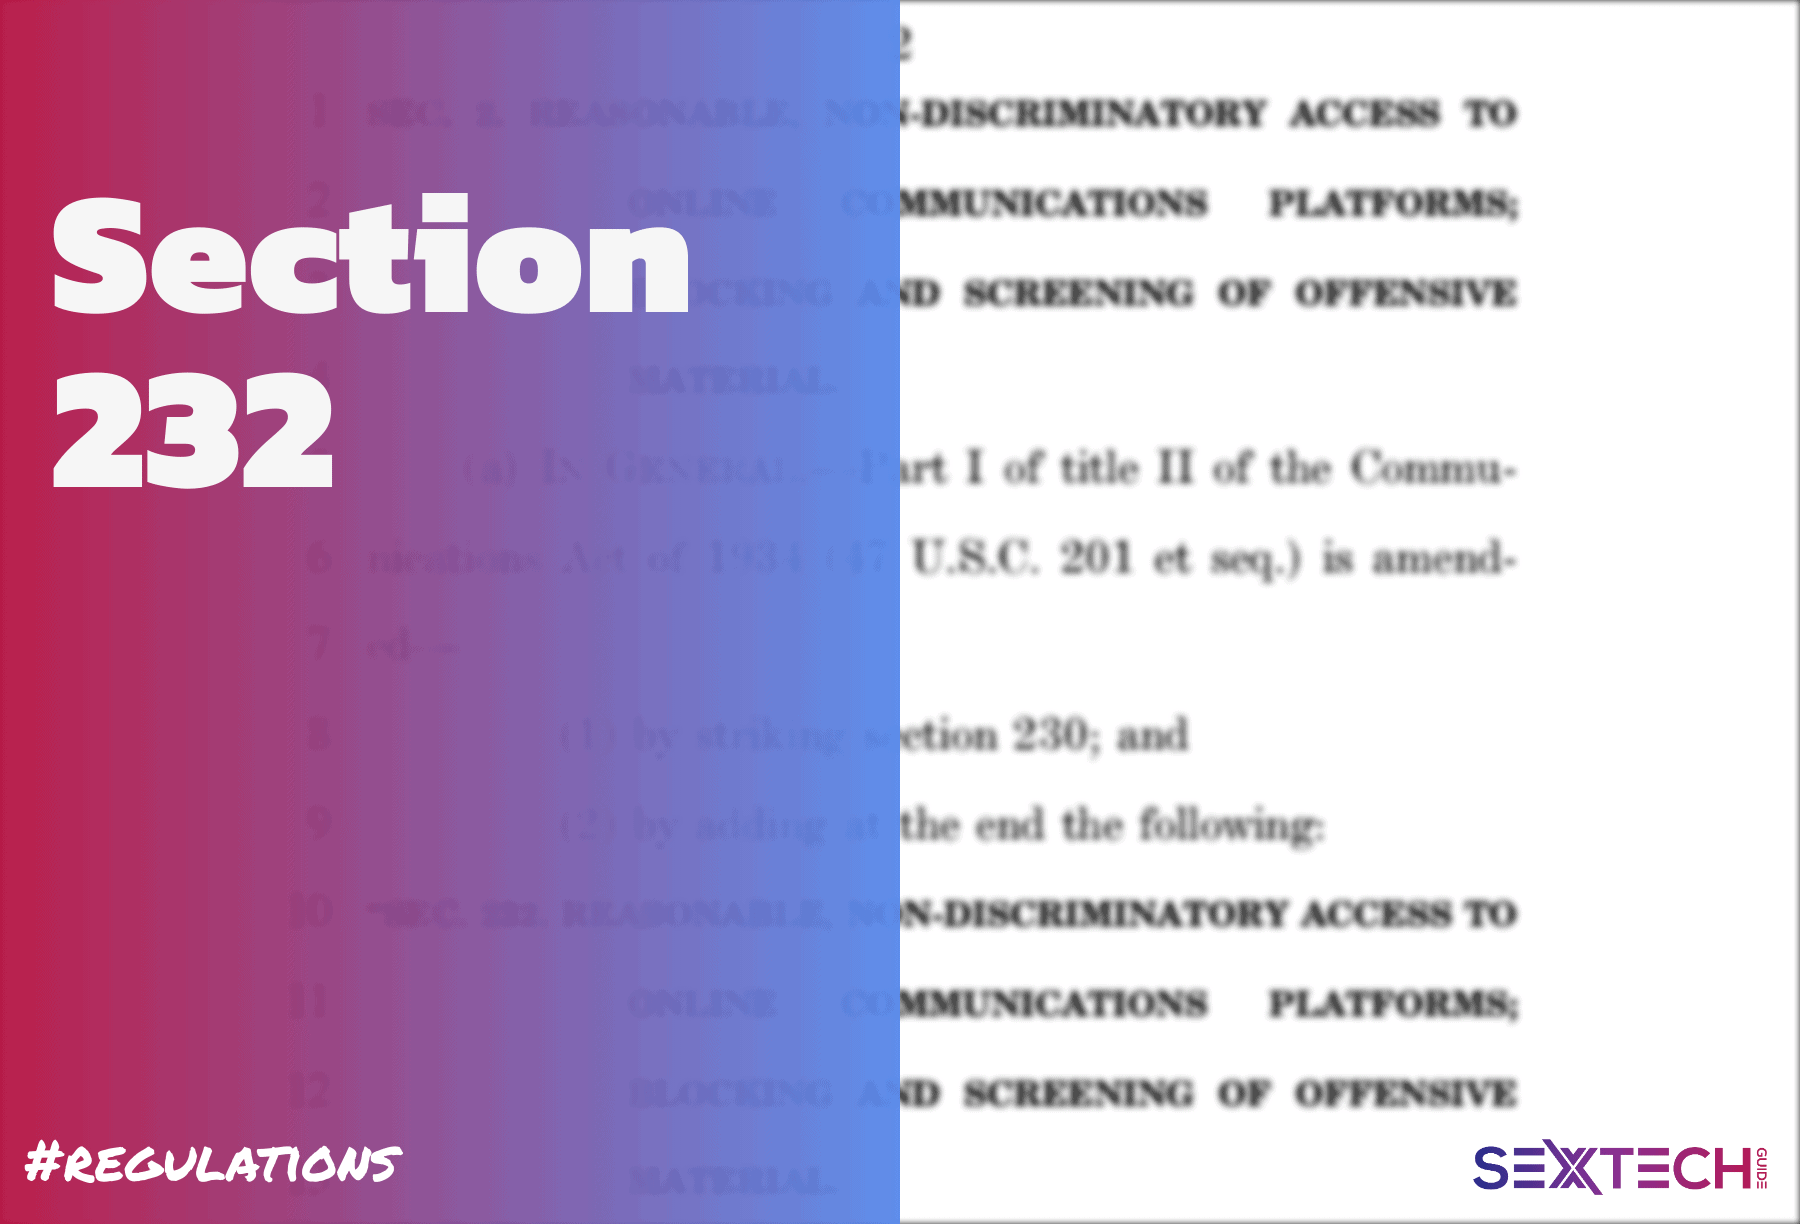 Section 232 regulation